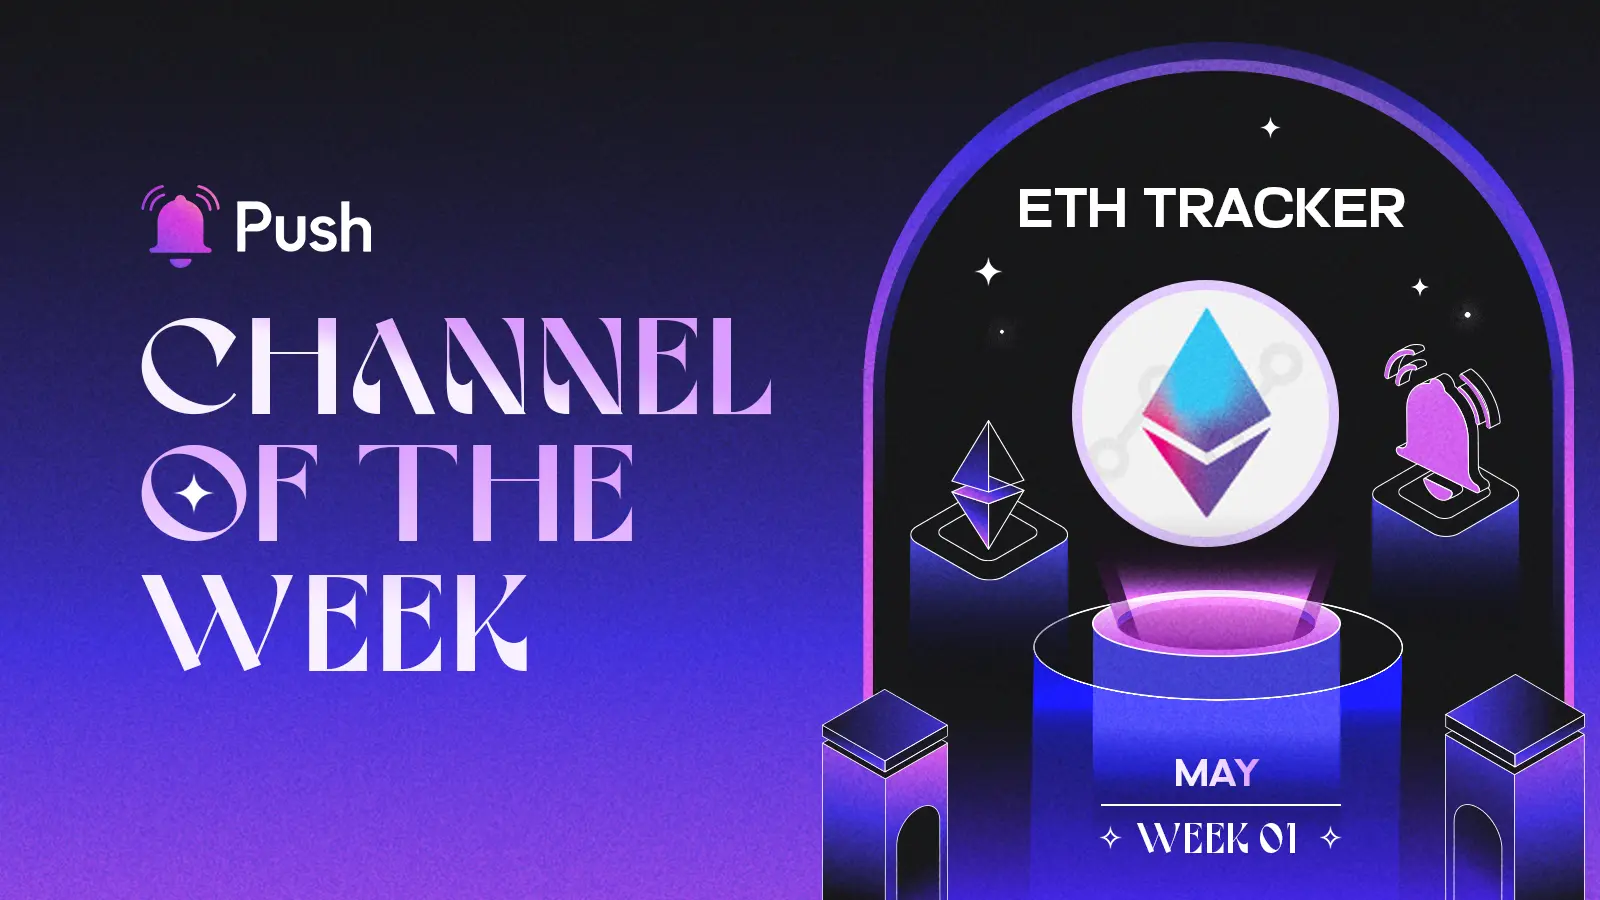 Banner celebrating ETH Tracker as May - week 1 channel of week